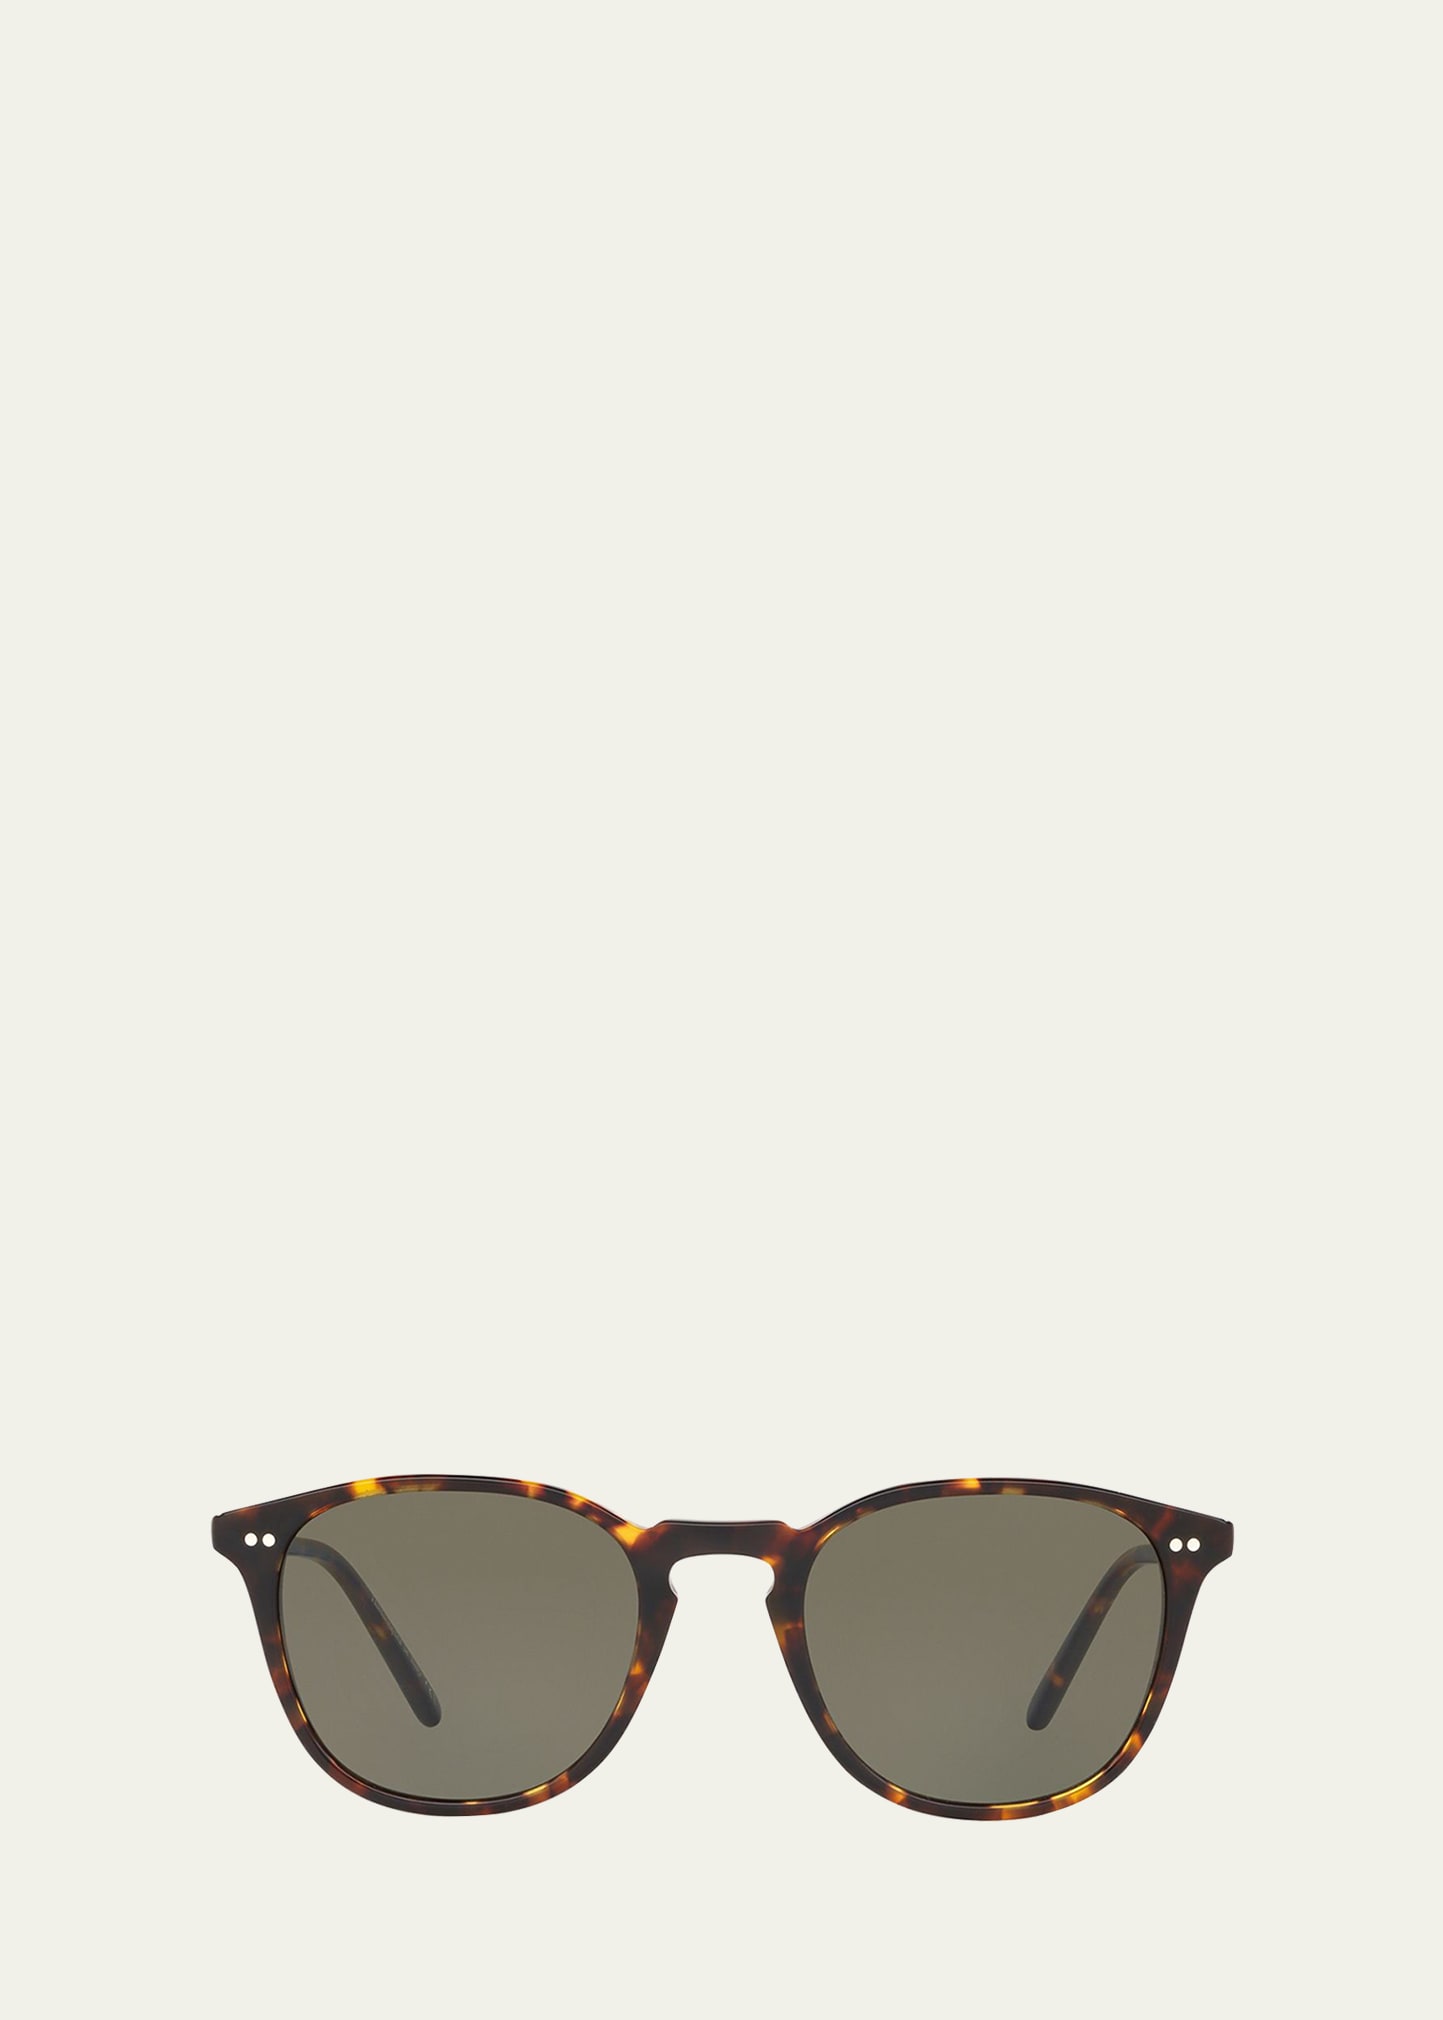 Men's Forman L. A. Tortoiseshell Sunglasses